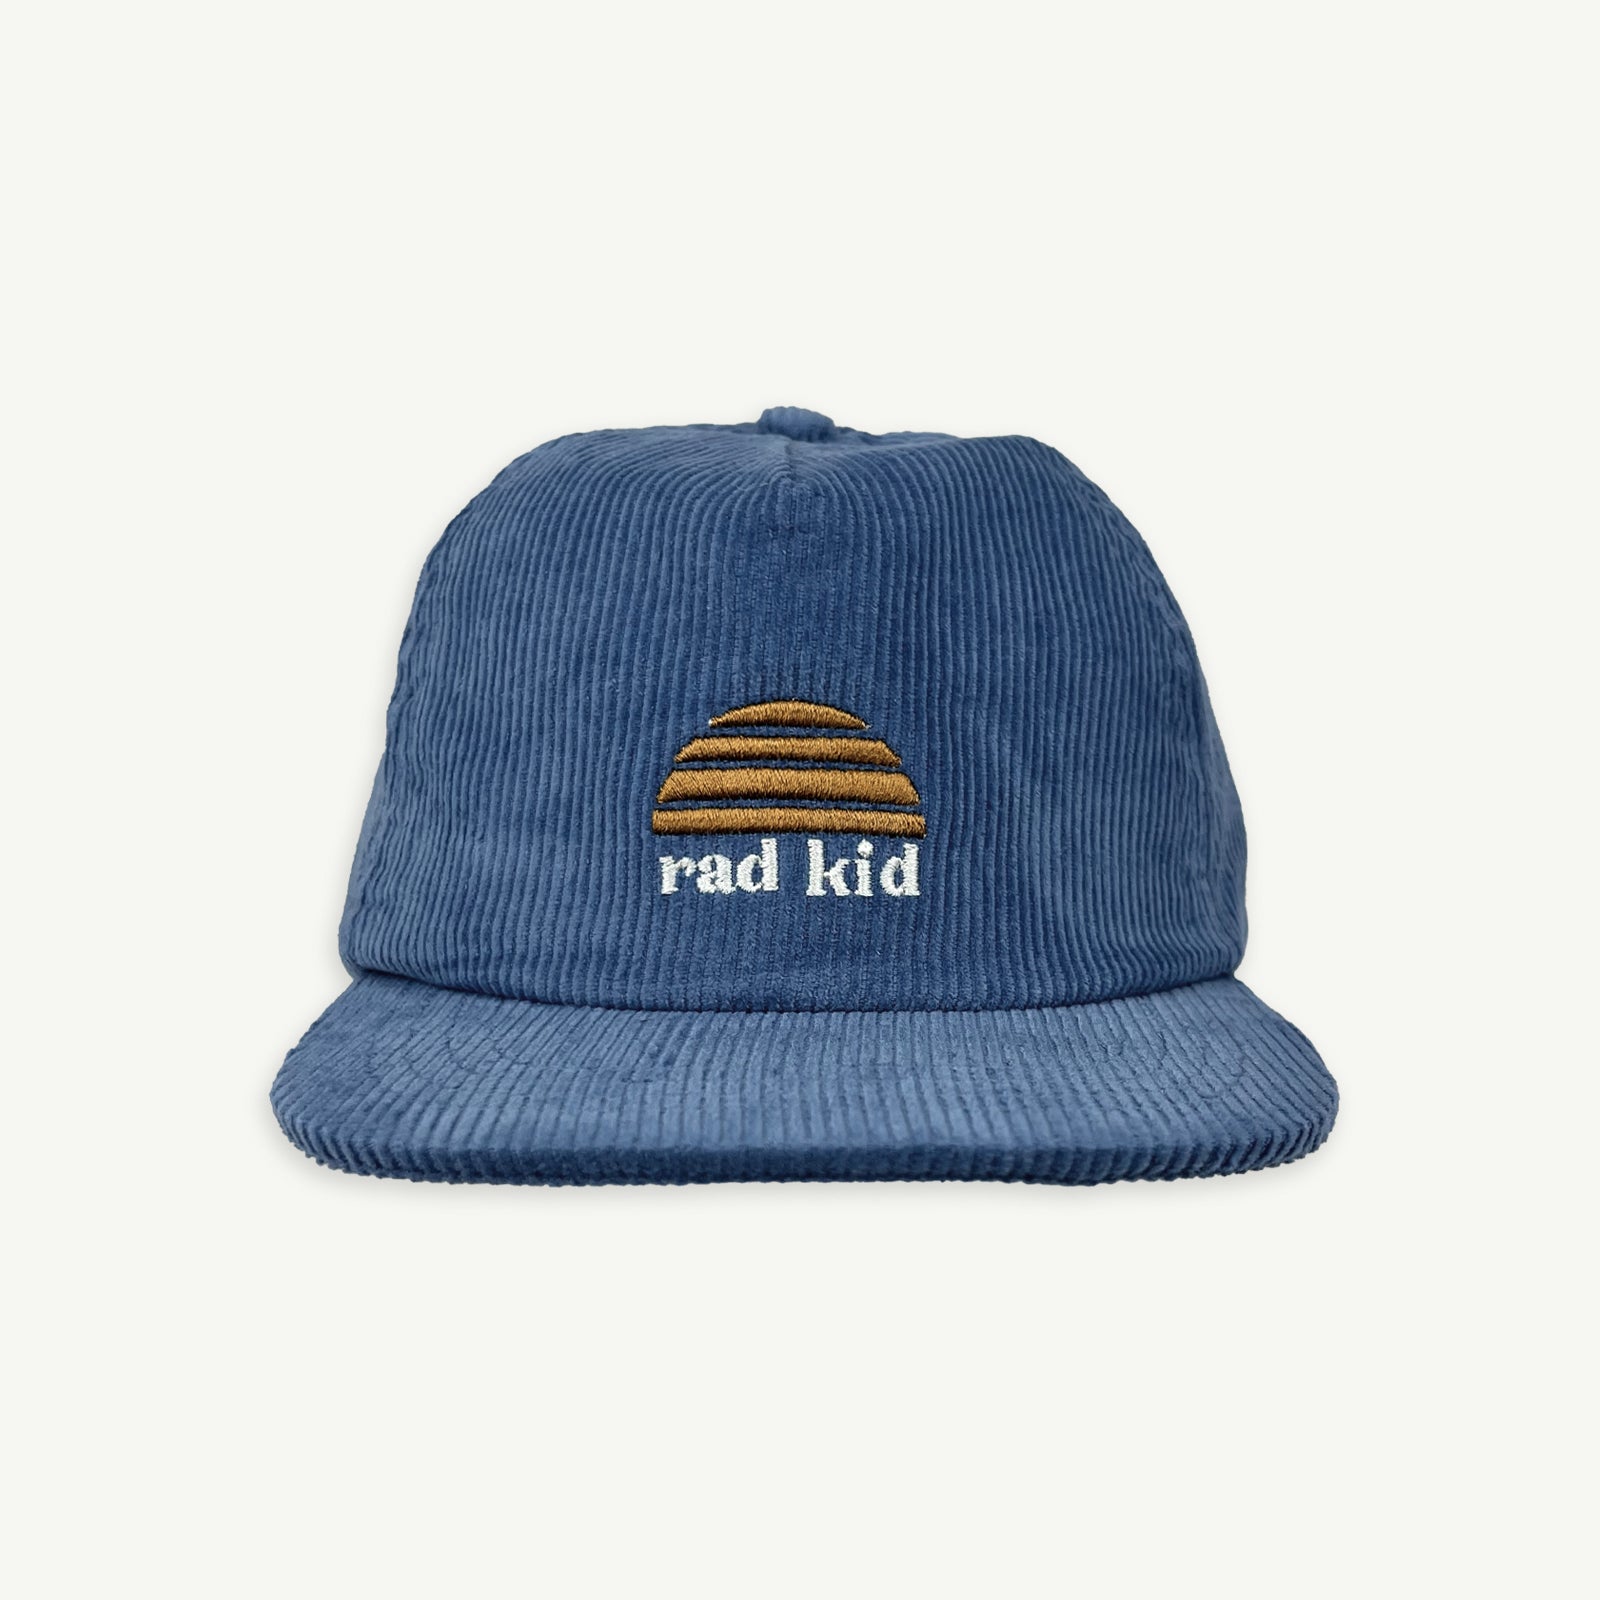 Rad Kid Cord Cap - Denim Blue